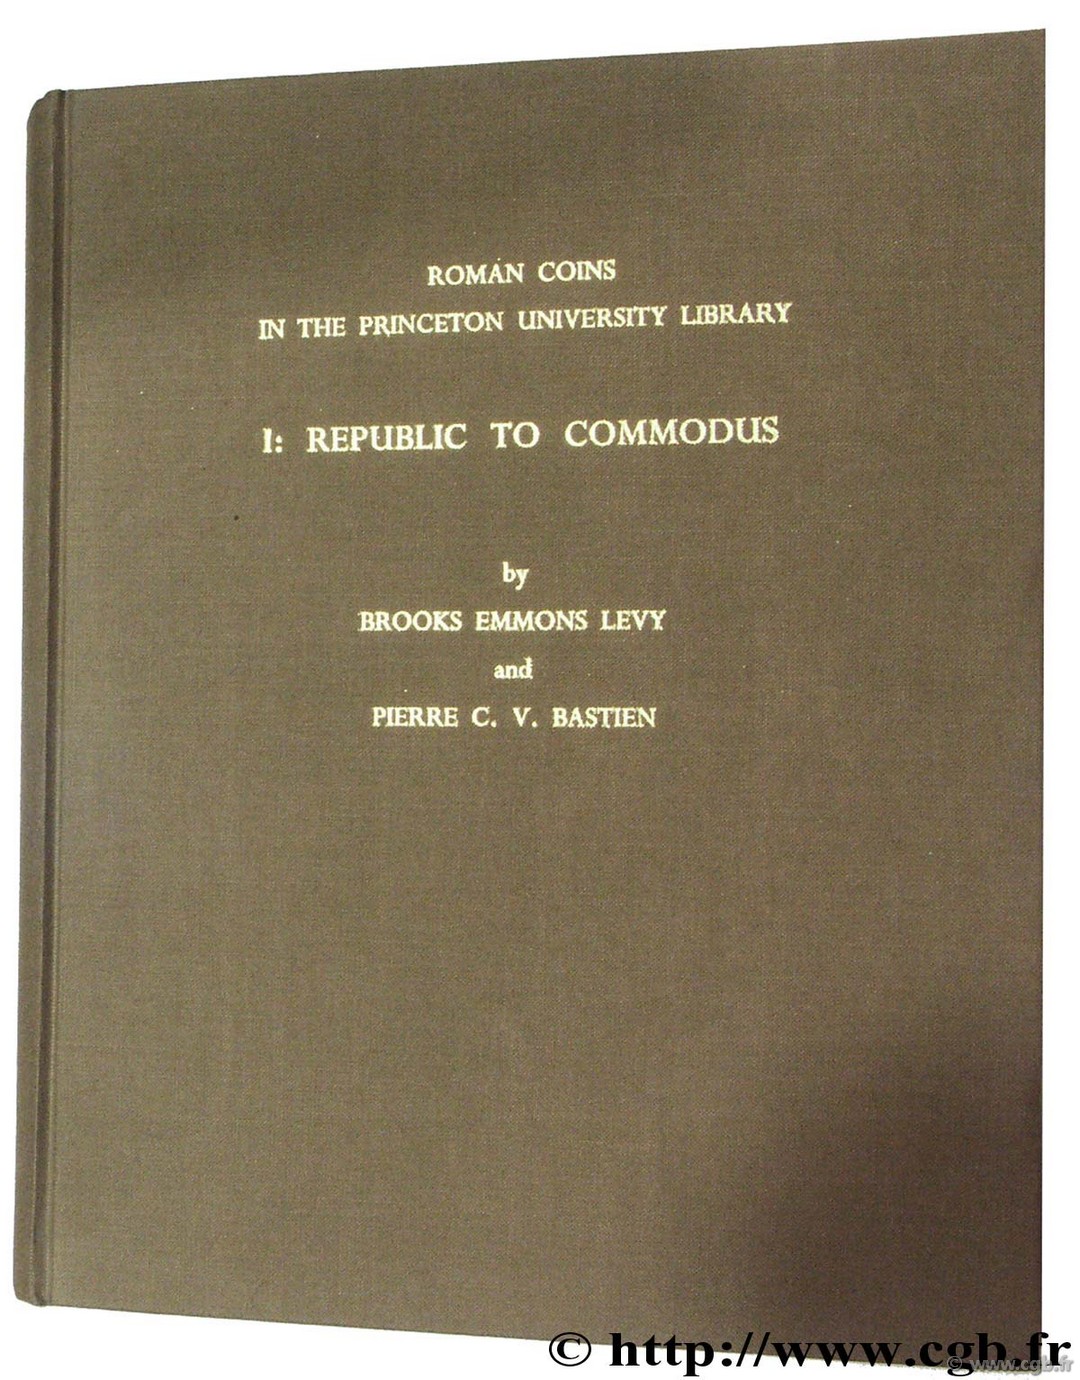 Roman Coins in the Princeton University, vol I : Republic to Commodus LEVY B.-E., BASTIEN P.